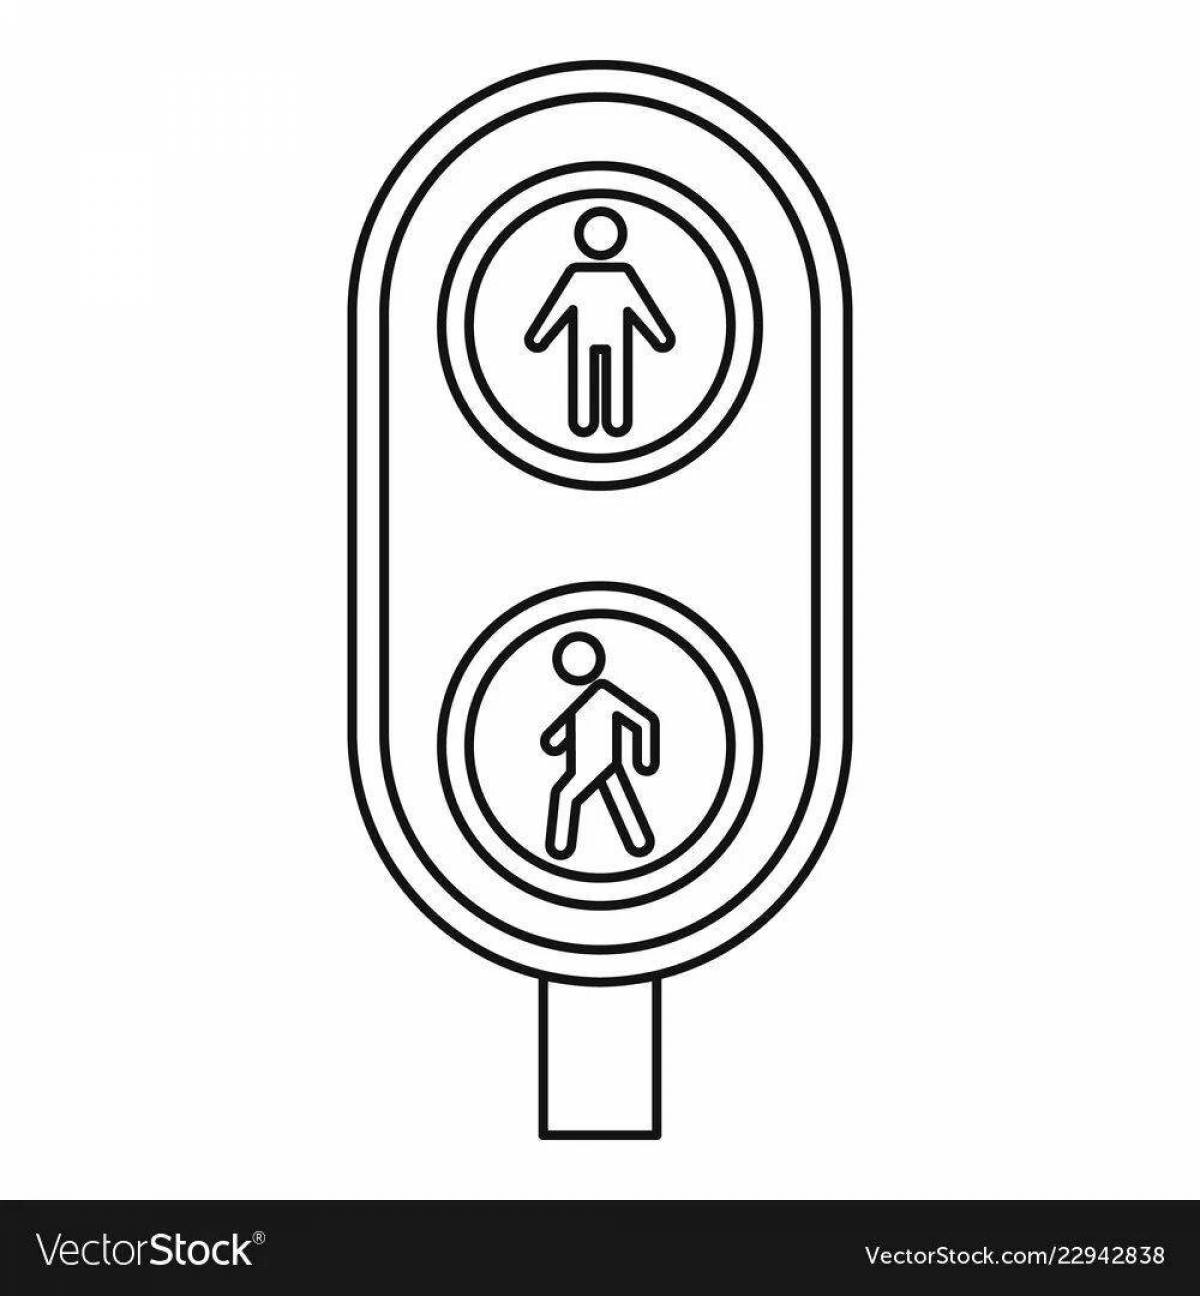 Majestic traffic light for pedestrians